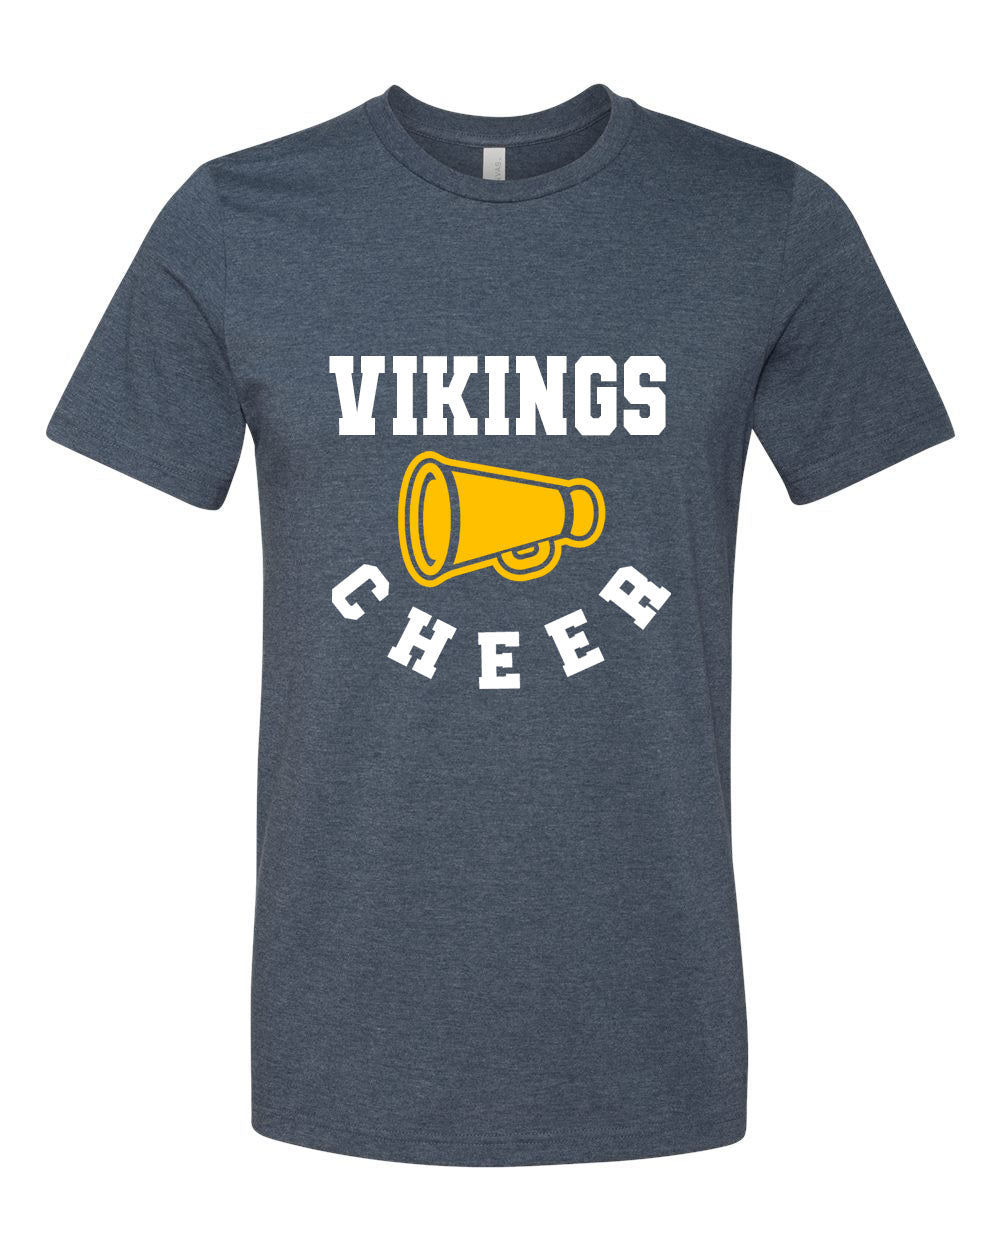 Vikings Cheer design 13 t-Shirt